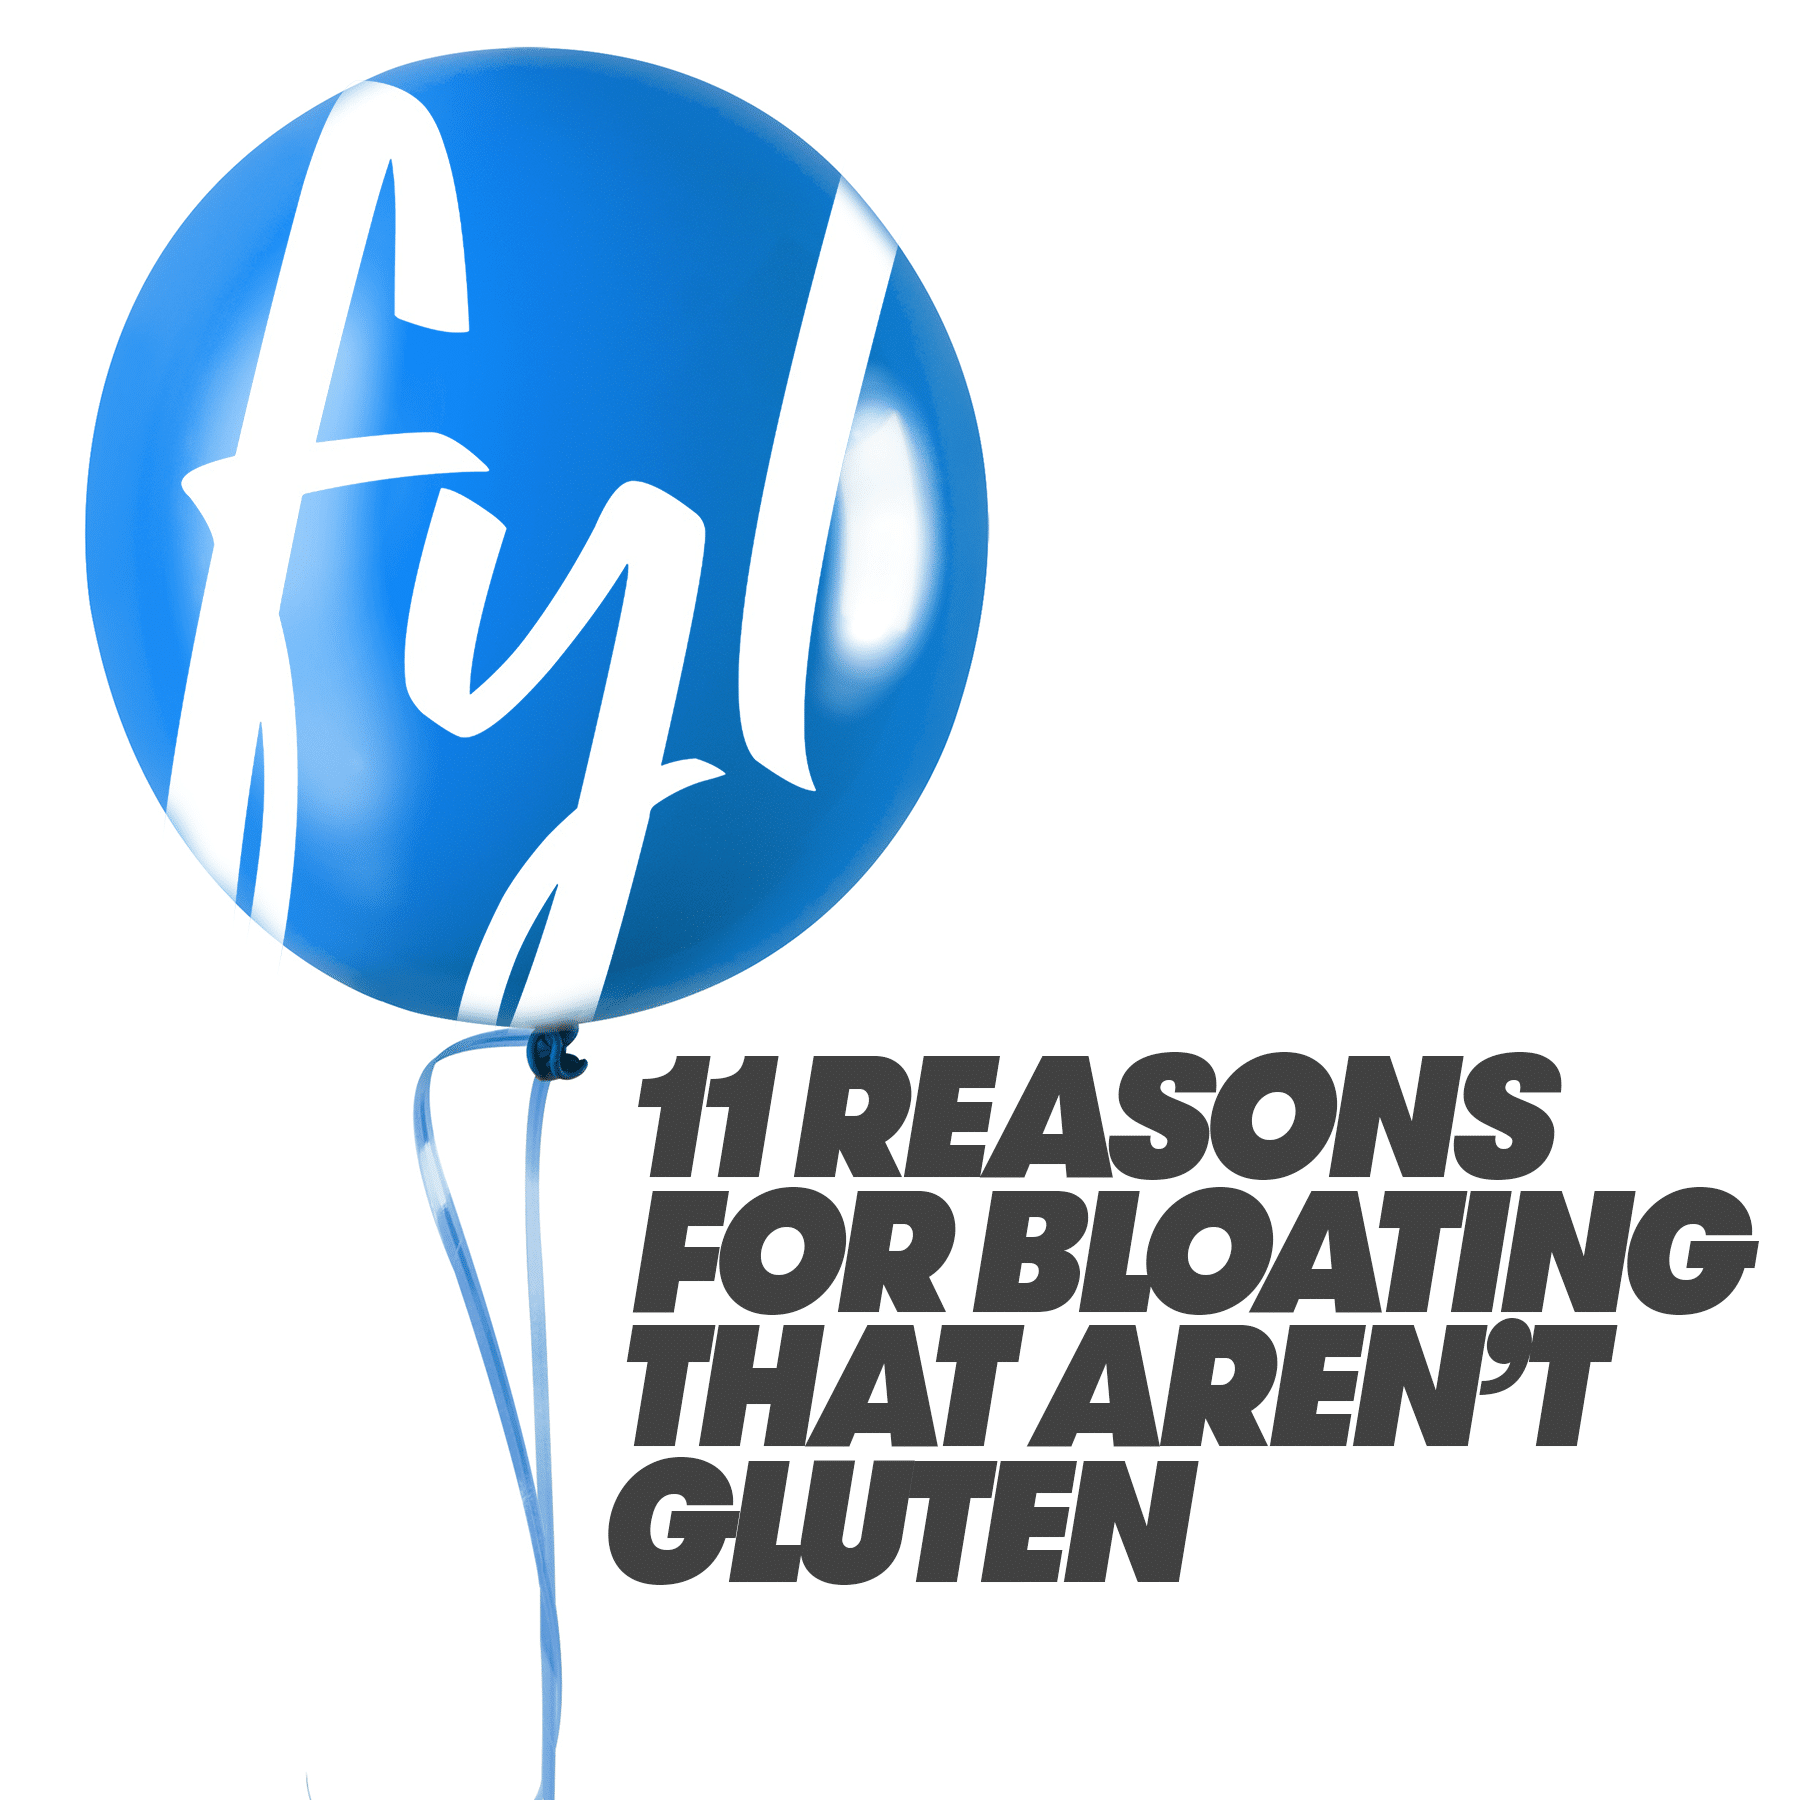 11 Reason For Bloating That Aren’t Gluten